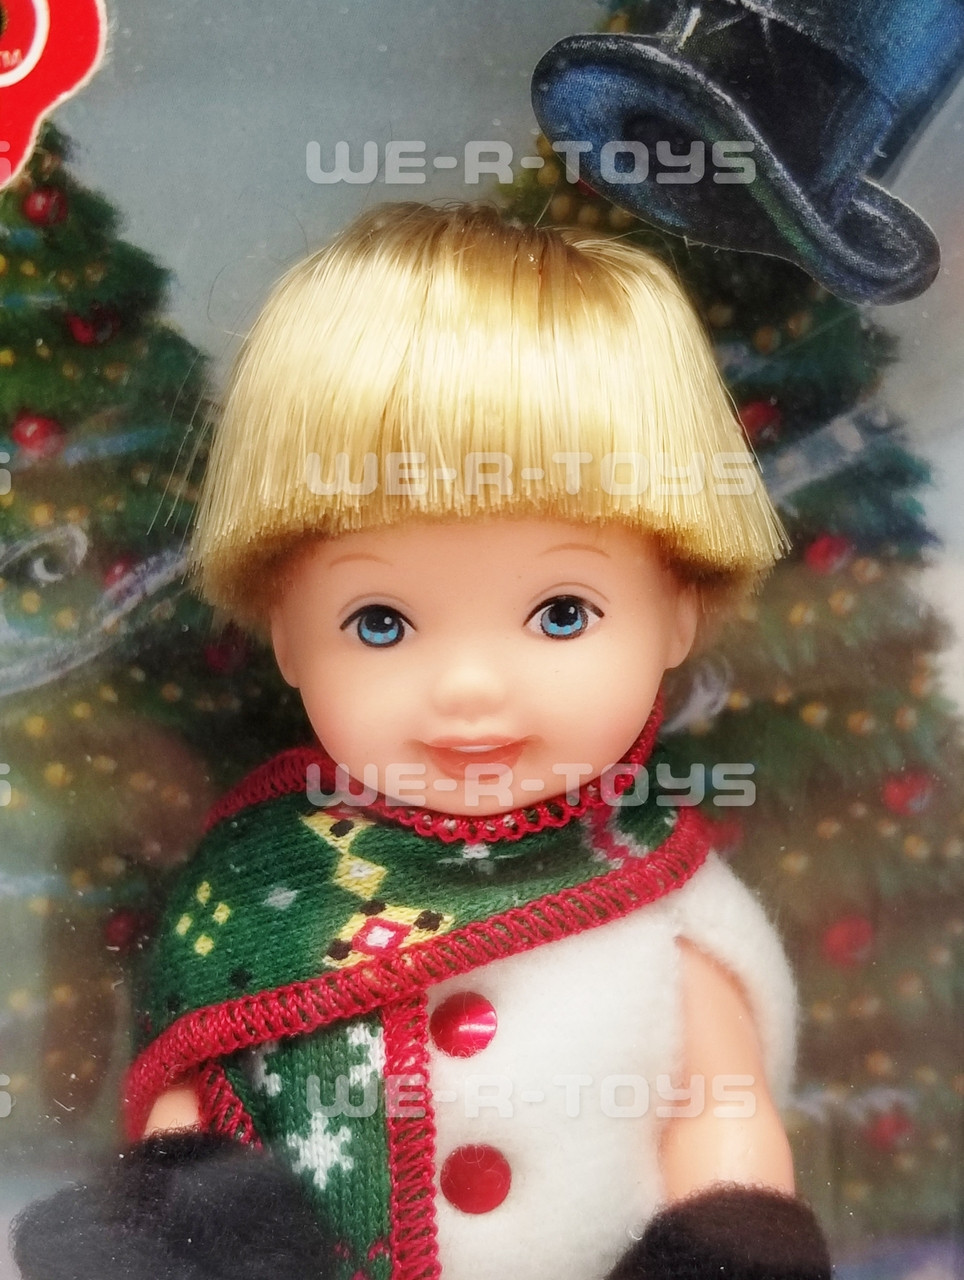 Kelly Club Snowman Tommy Barbie Doll 2001 Mattel #50377